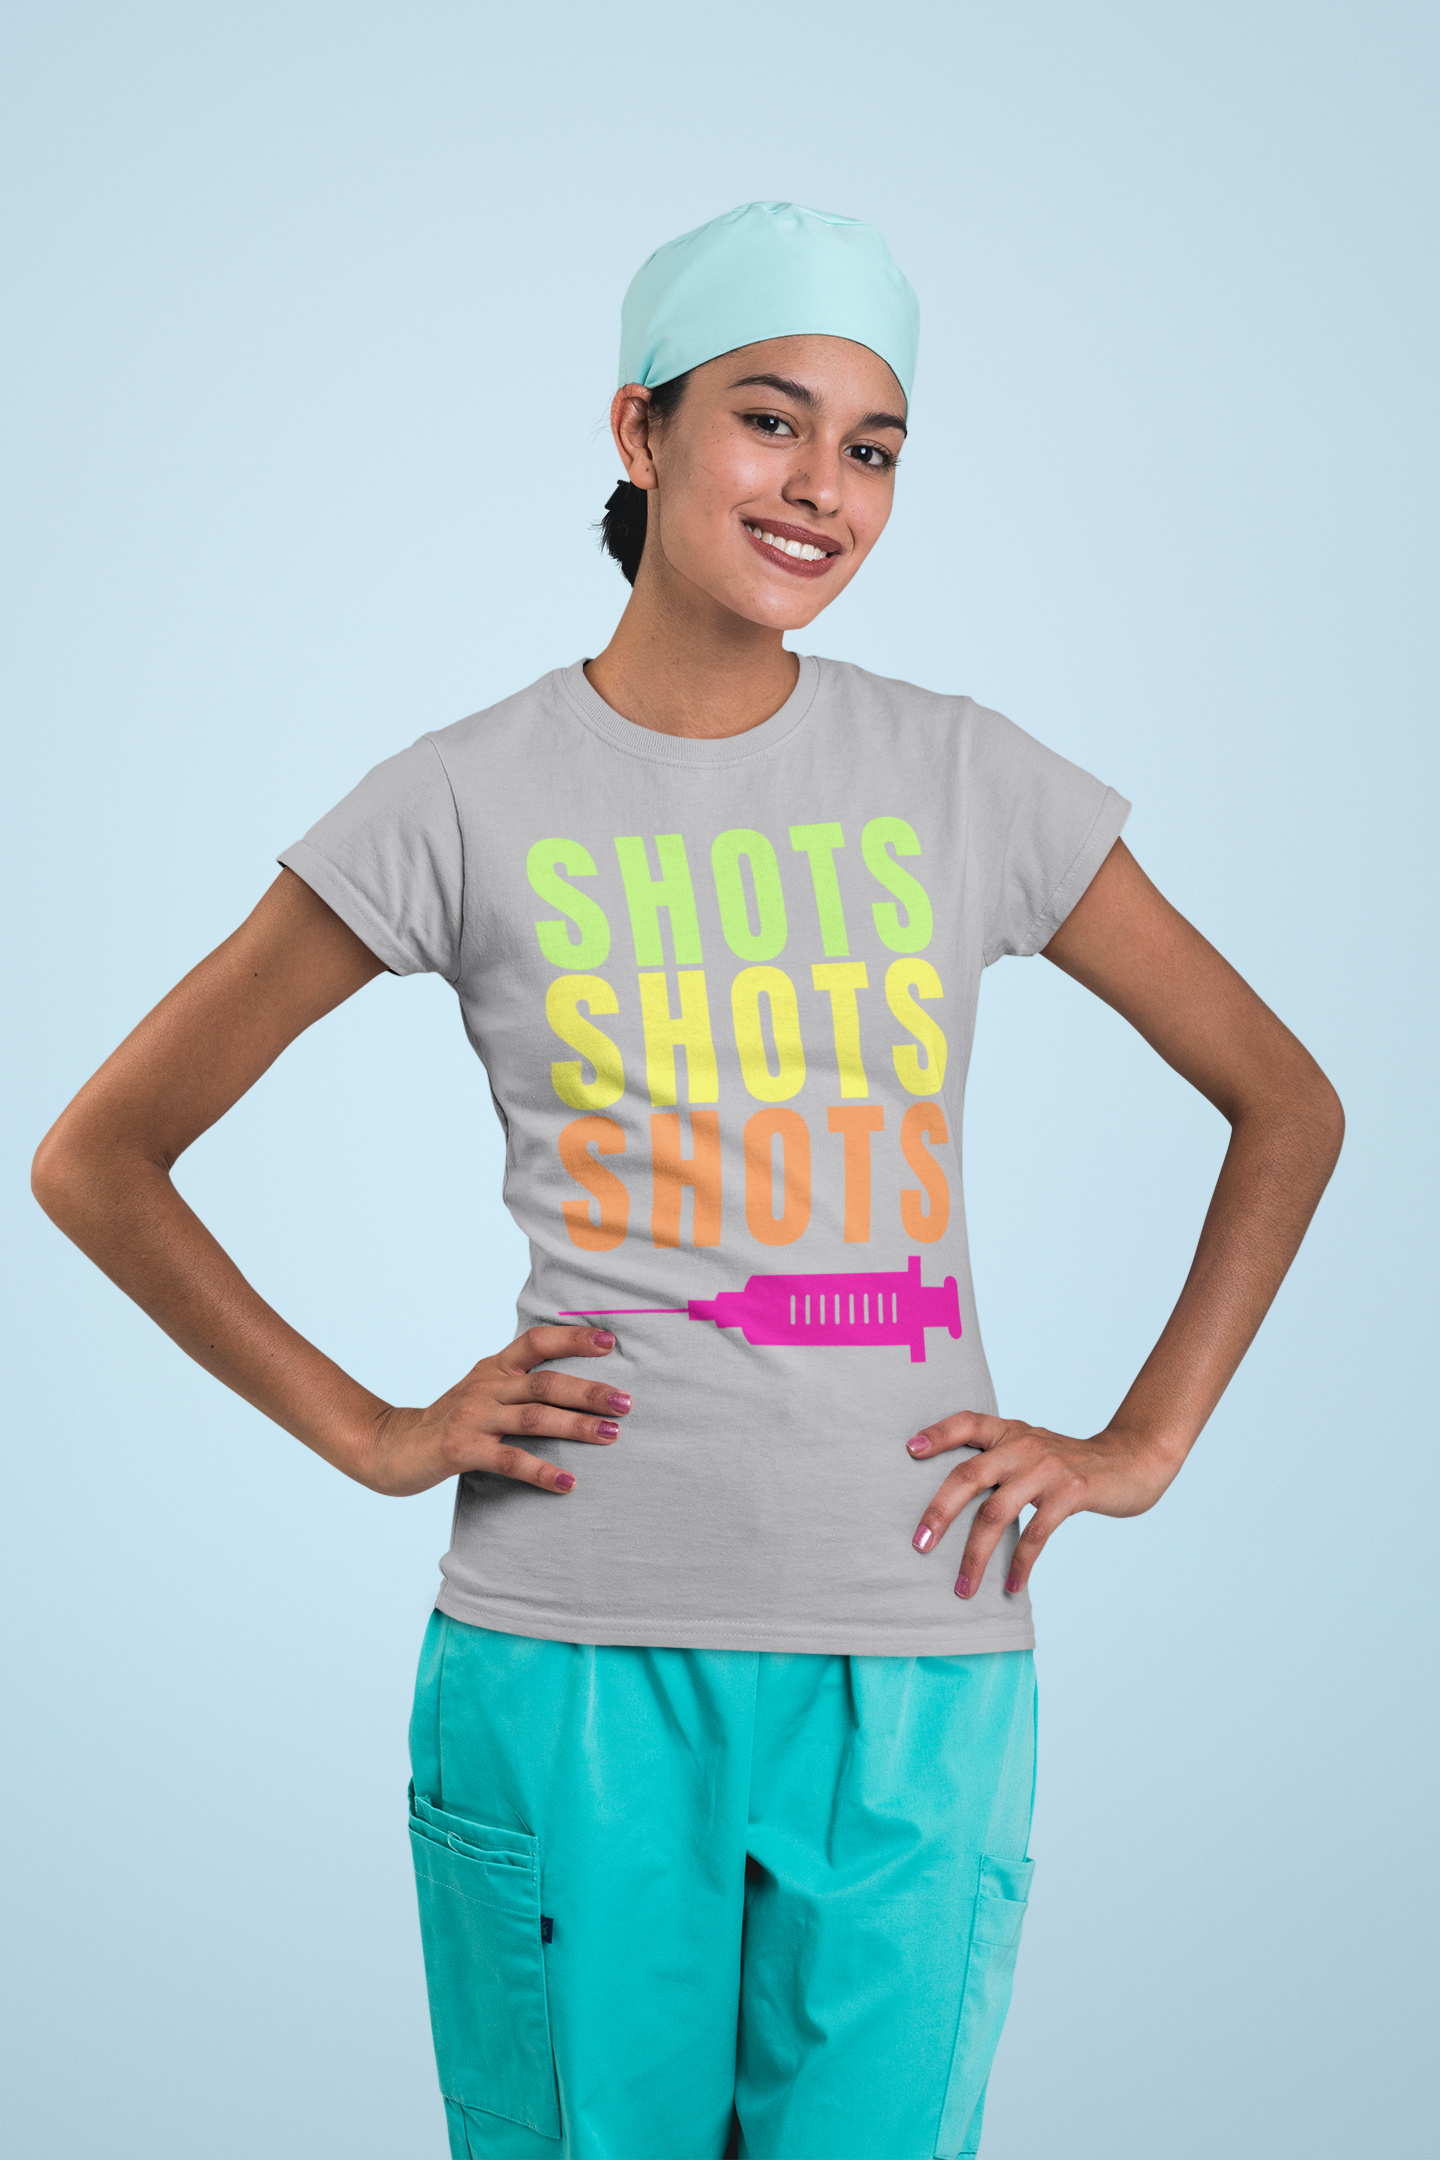 Shots, Shots, Shots T-Shirt